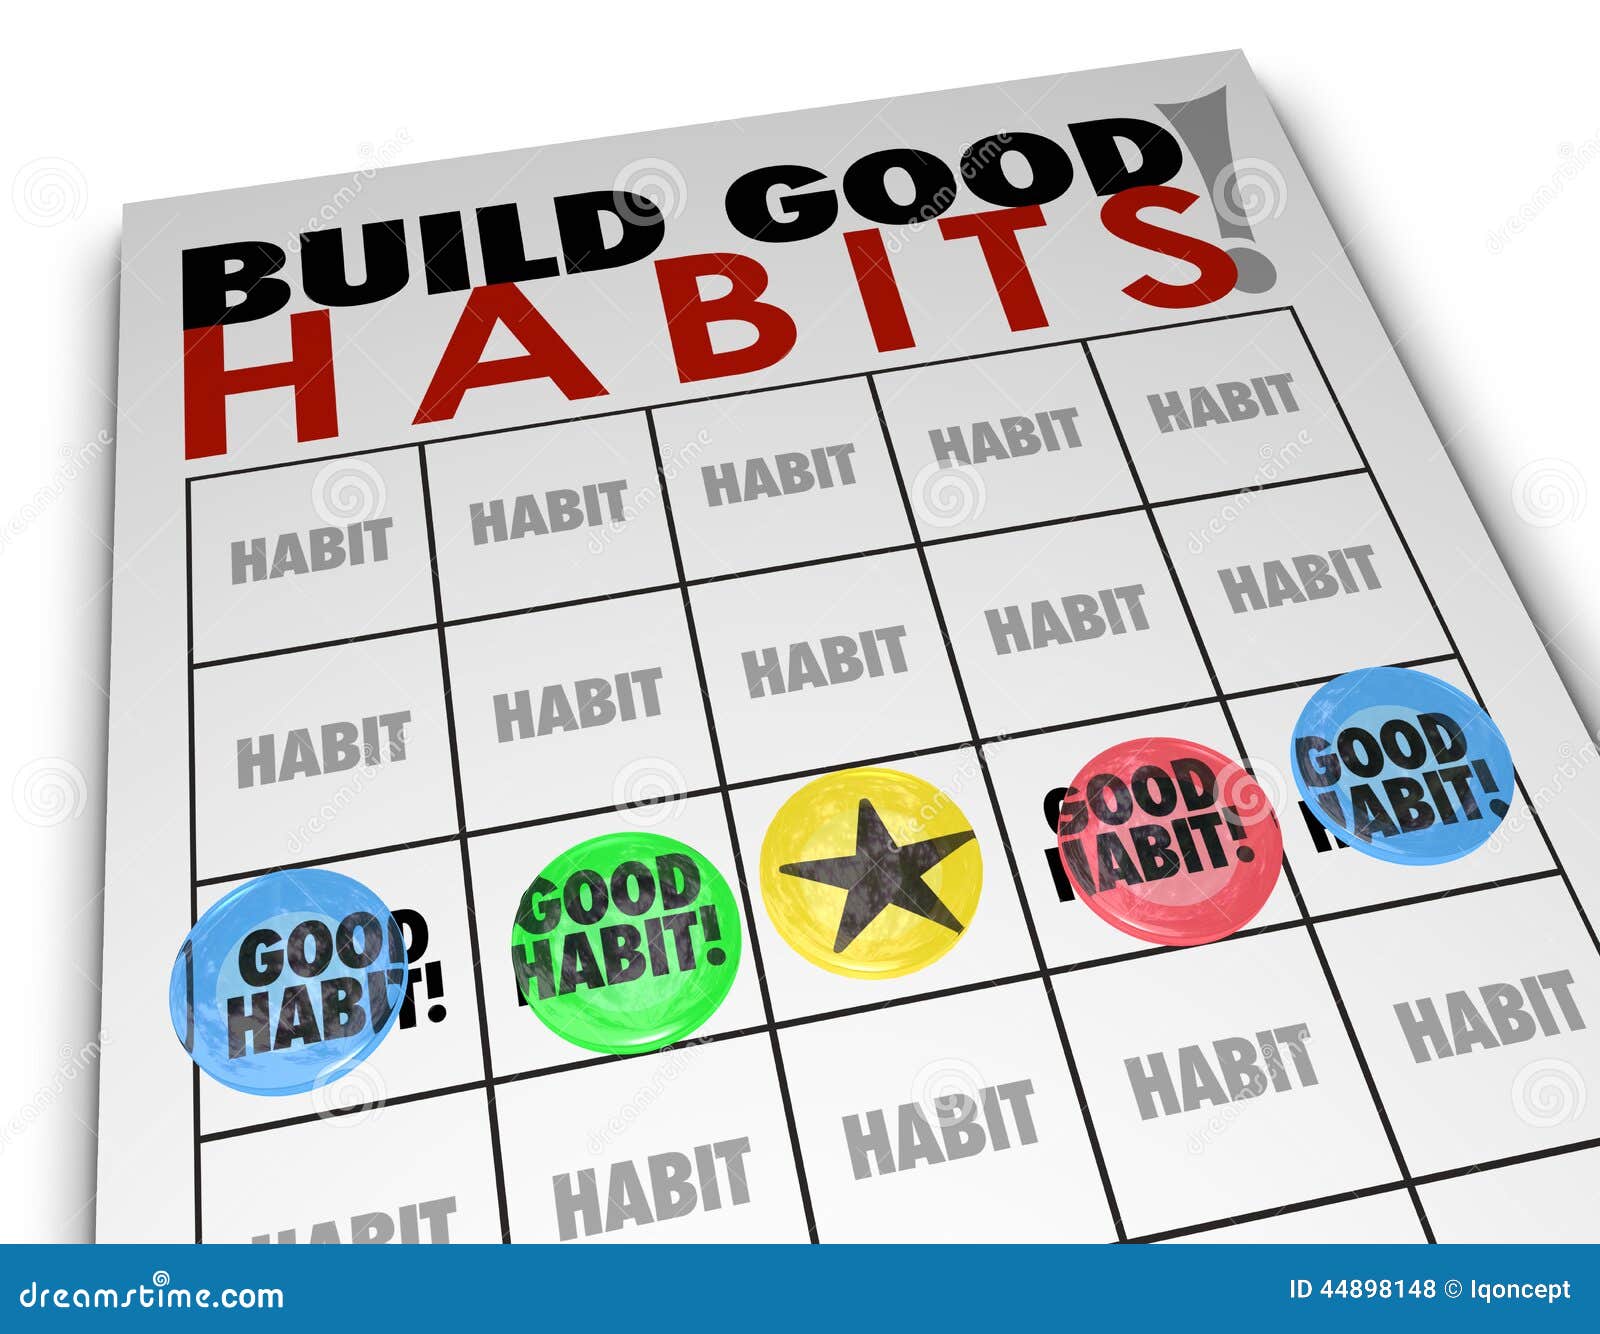 good habits clipart - photo #44